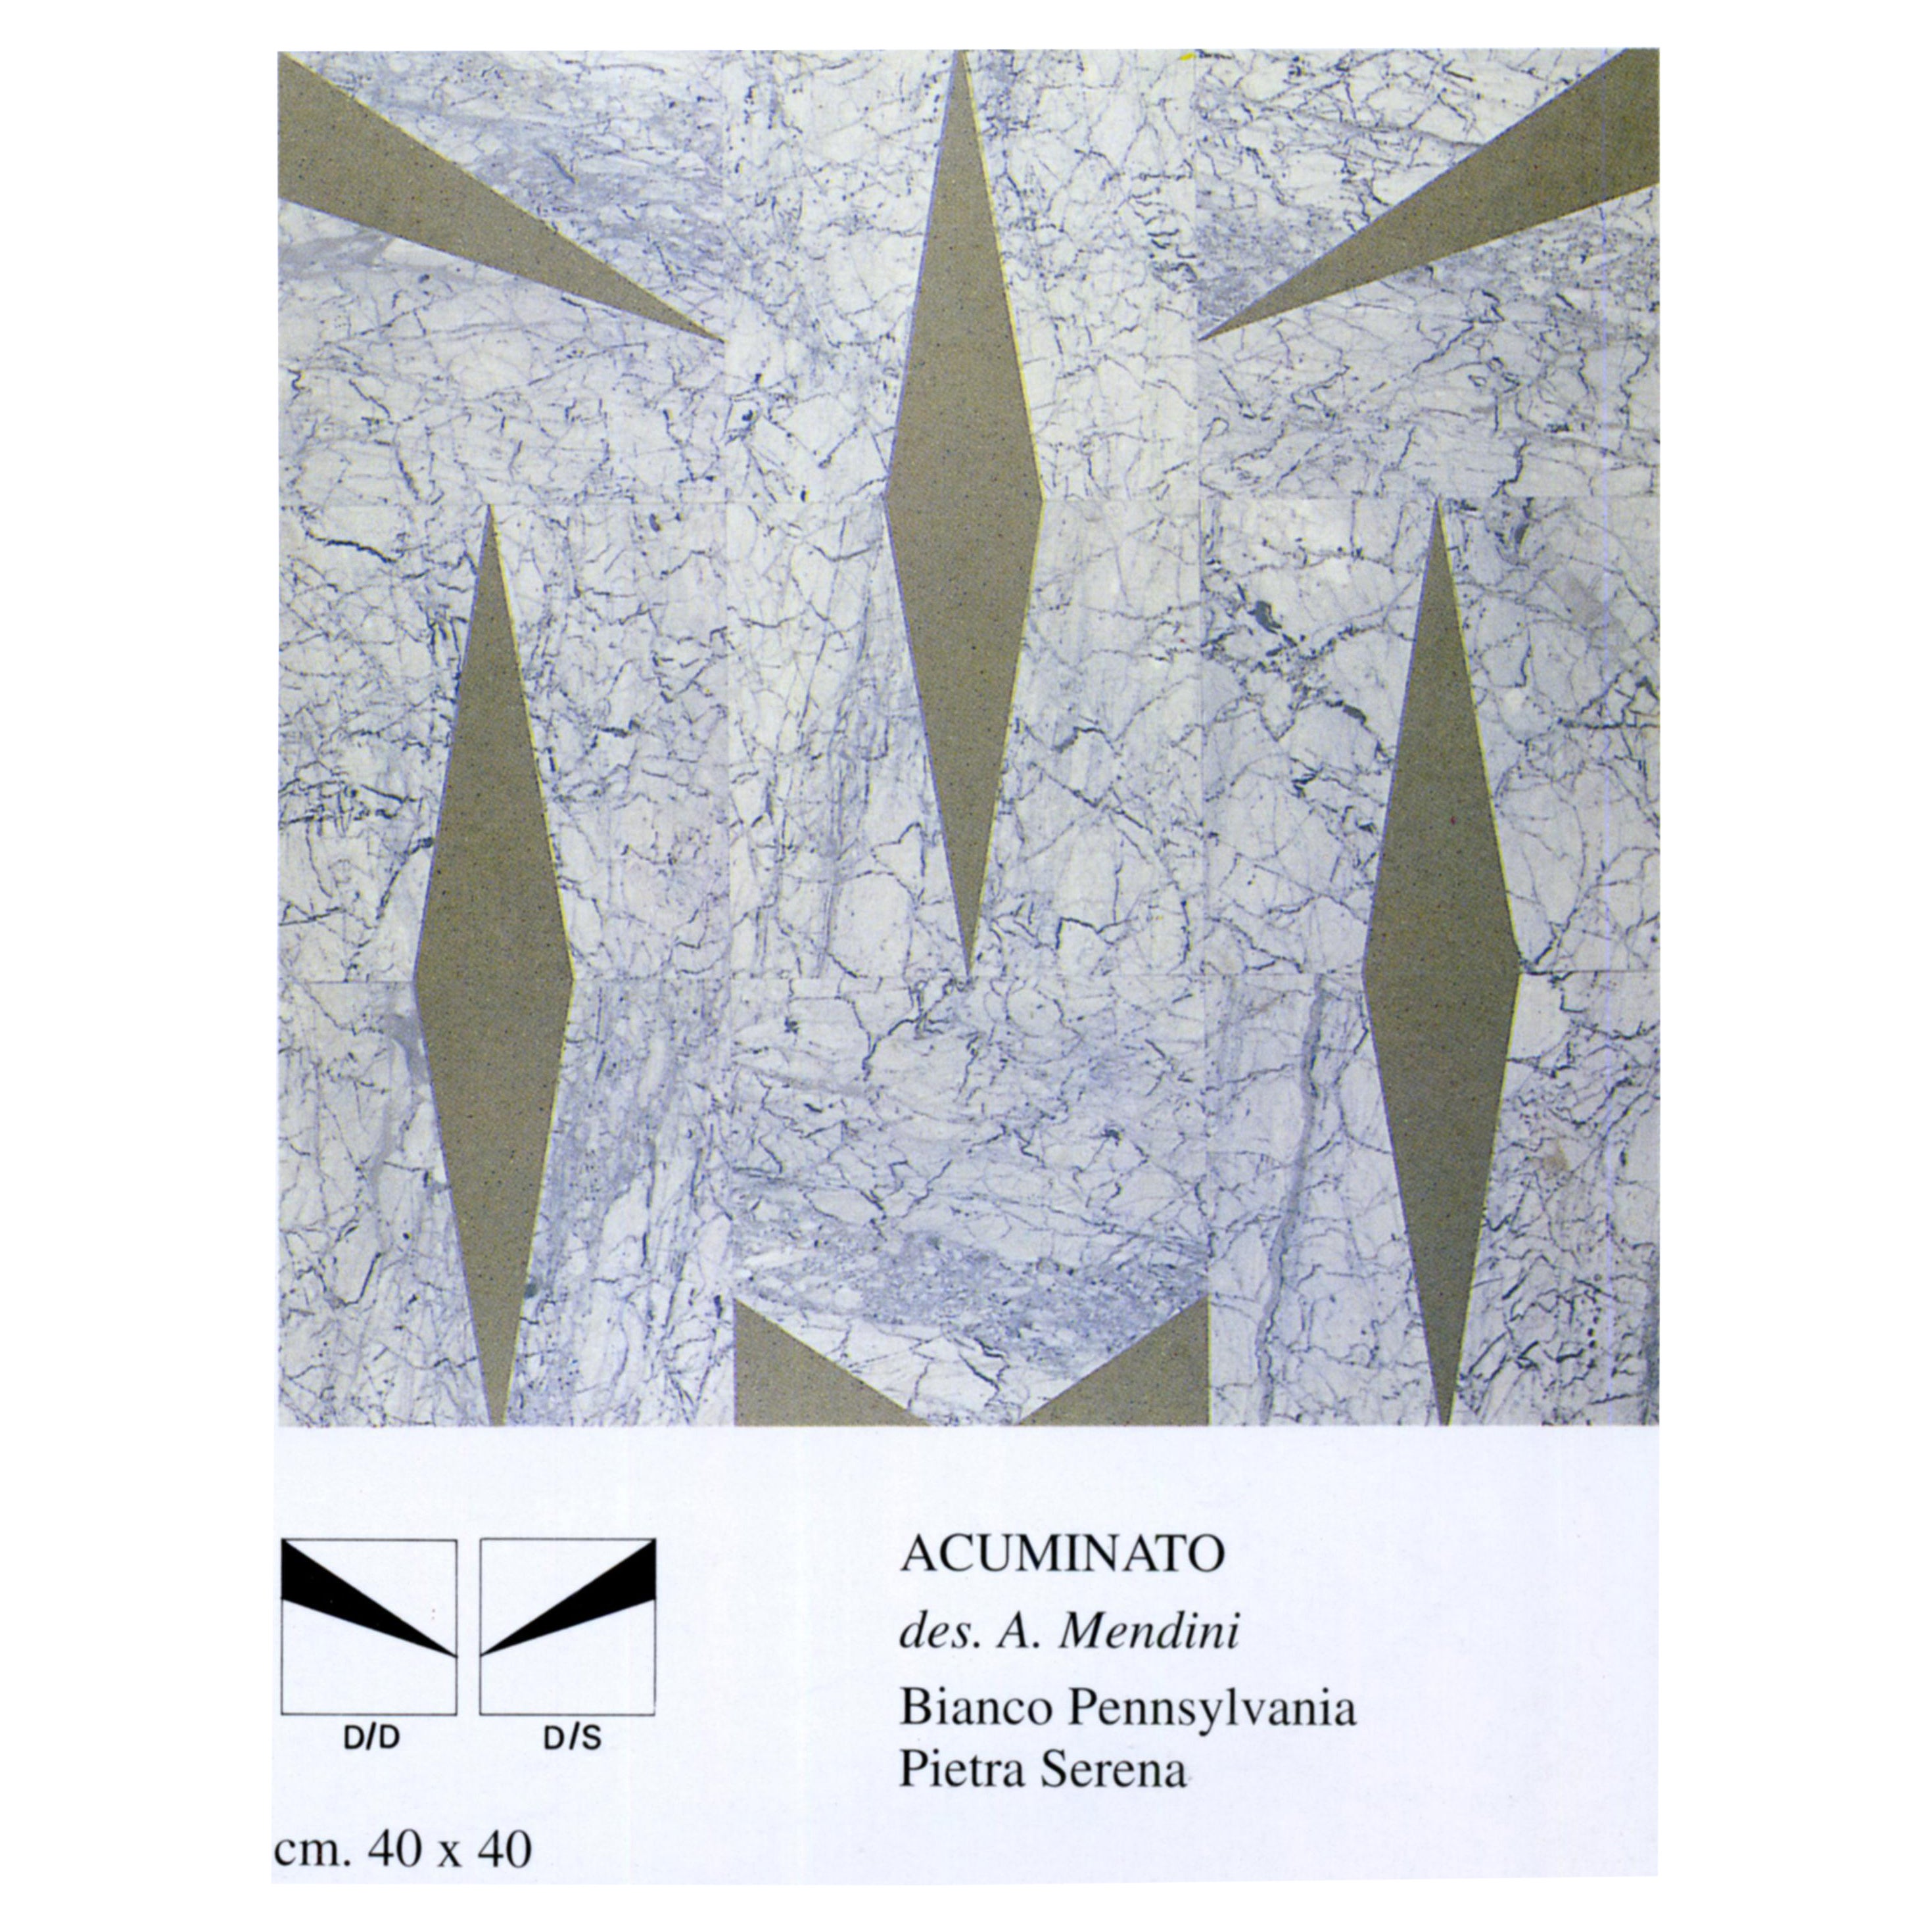 21st Century by A.Mendini "ACCUMINATO" Italian Modular Marble Floor and Coating